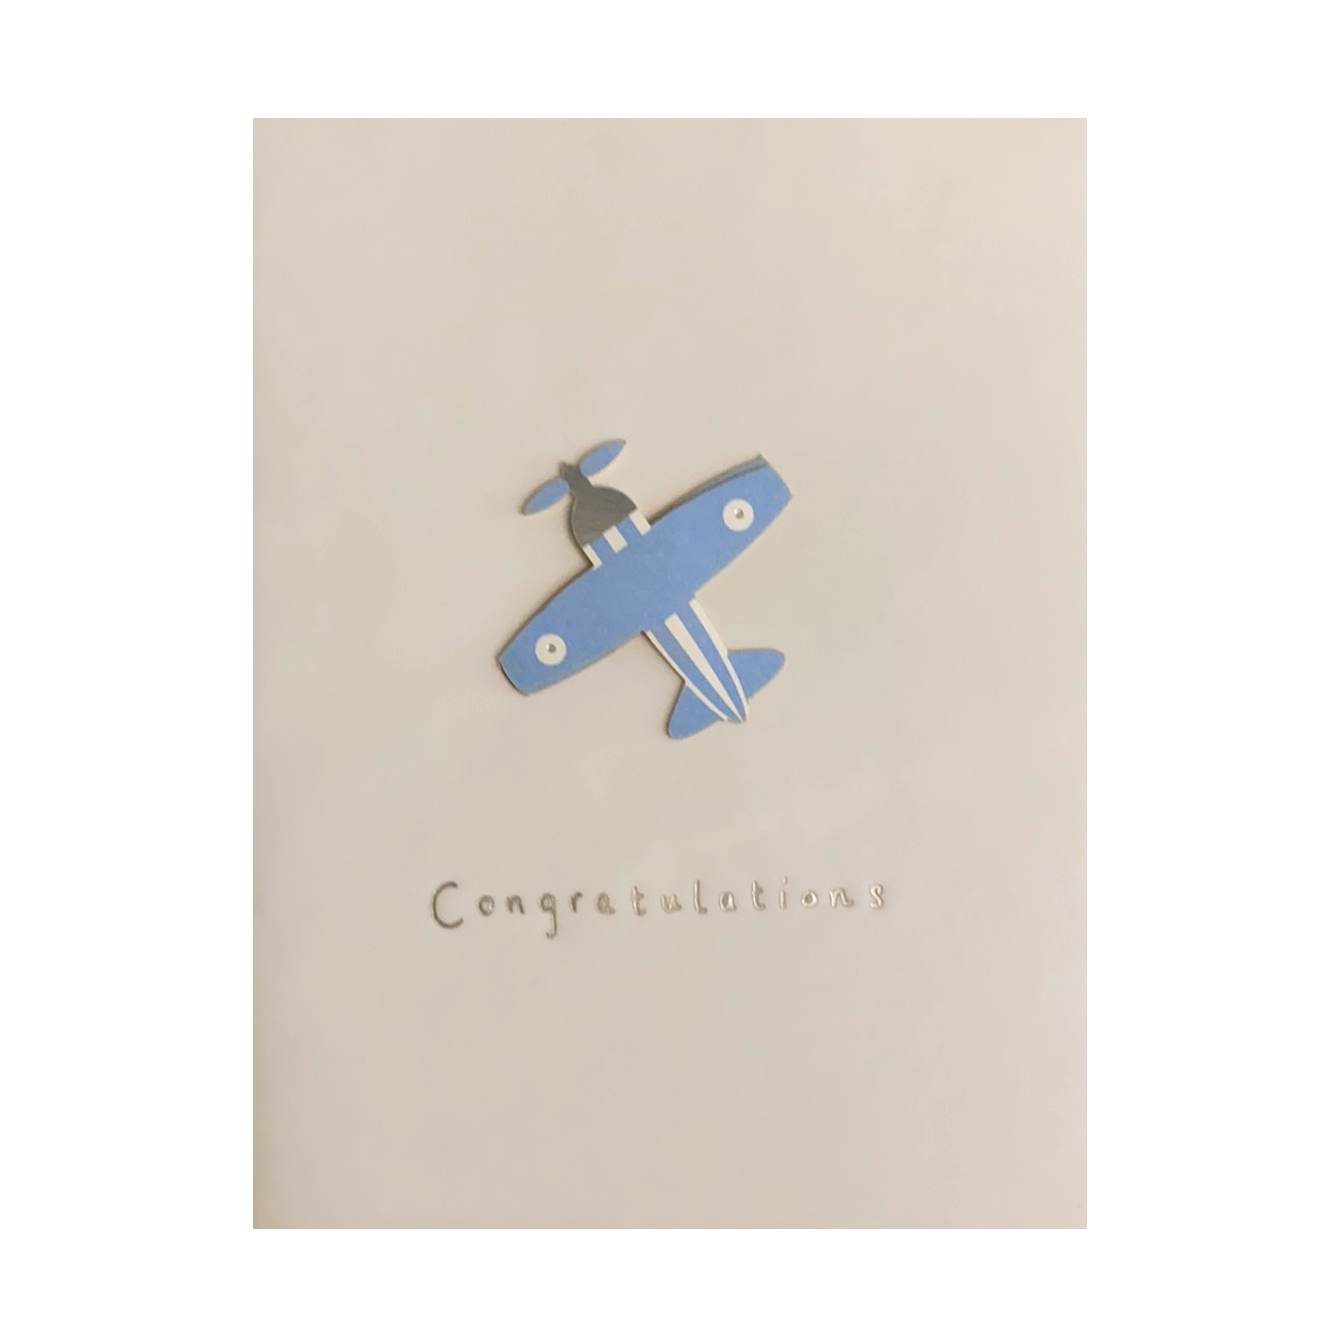 Congratulations Blue Plane Card